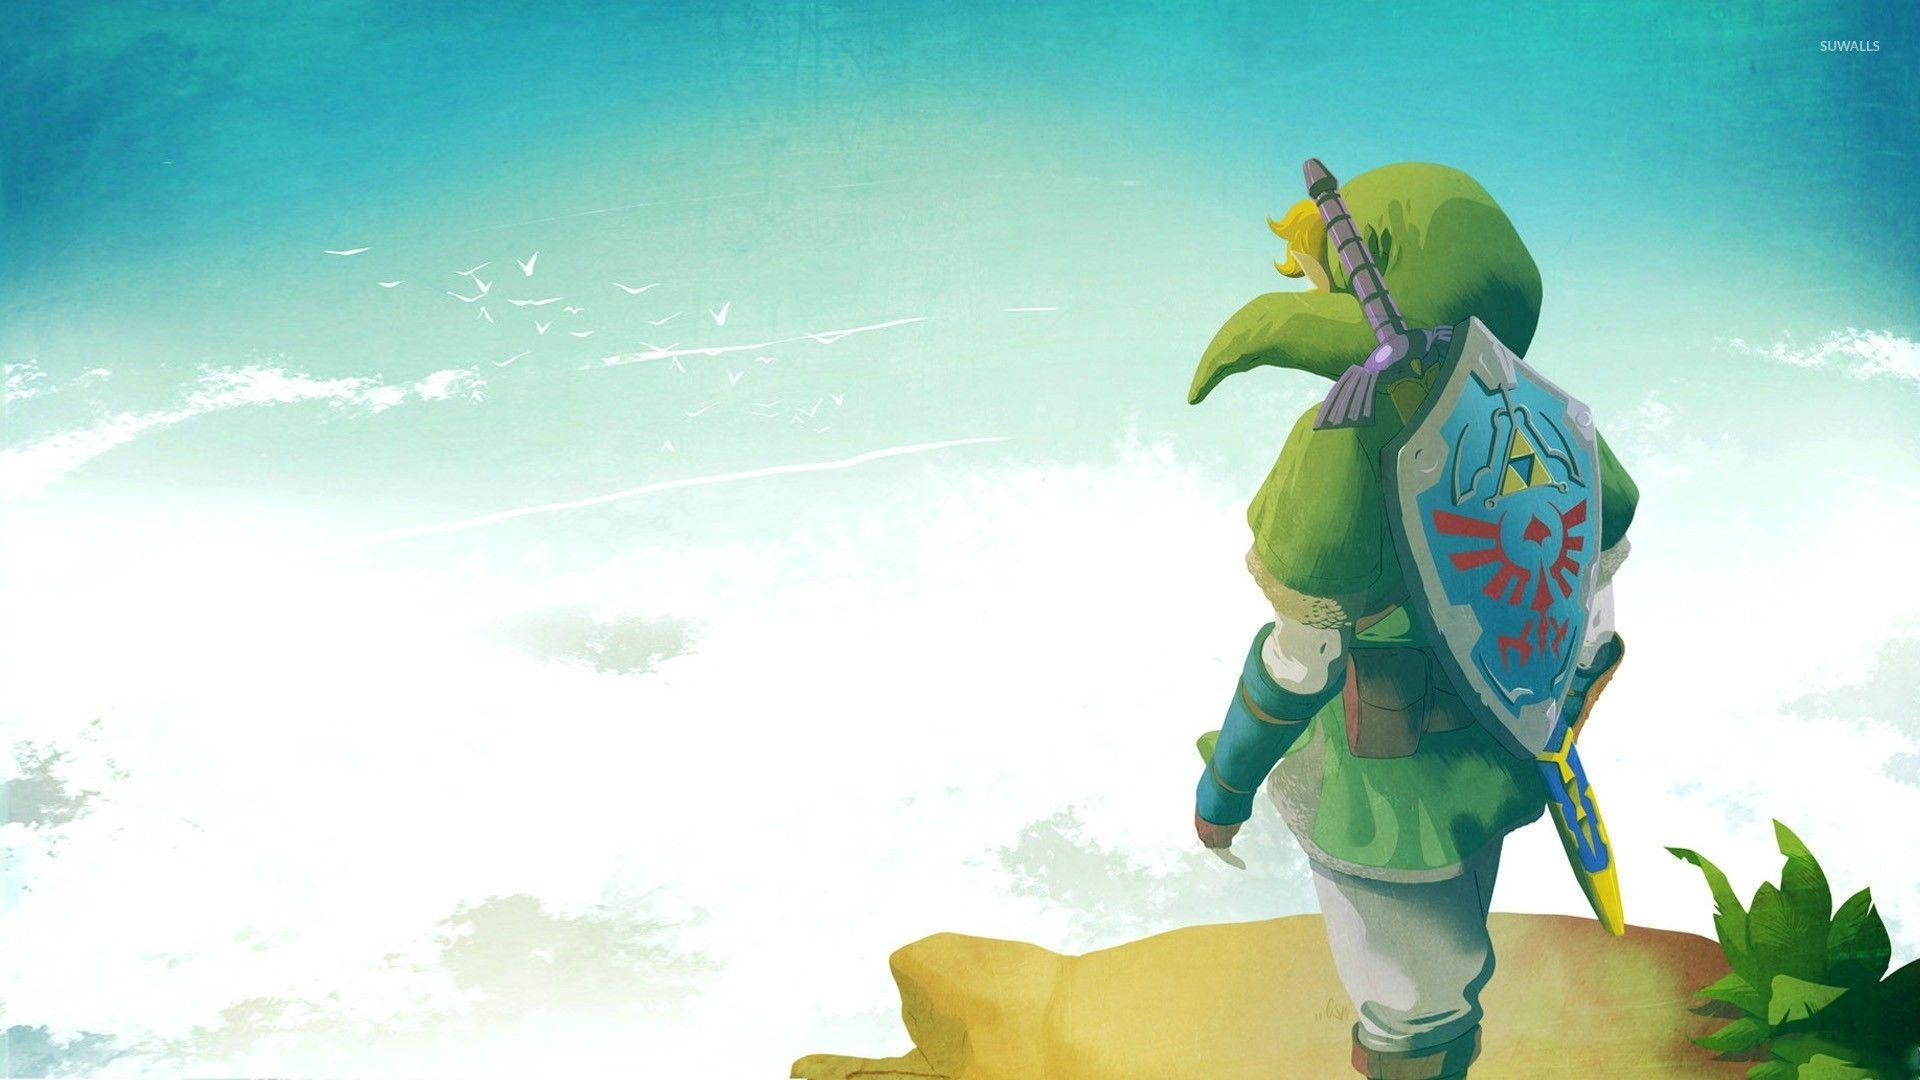 Royalty Free Legend Of Zelda Link To The Past Wallpaper